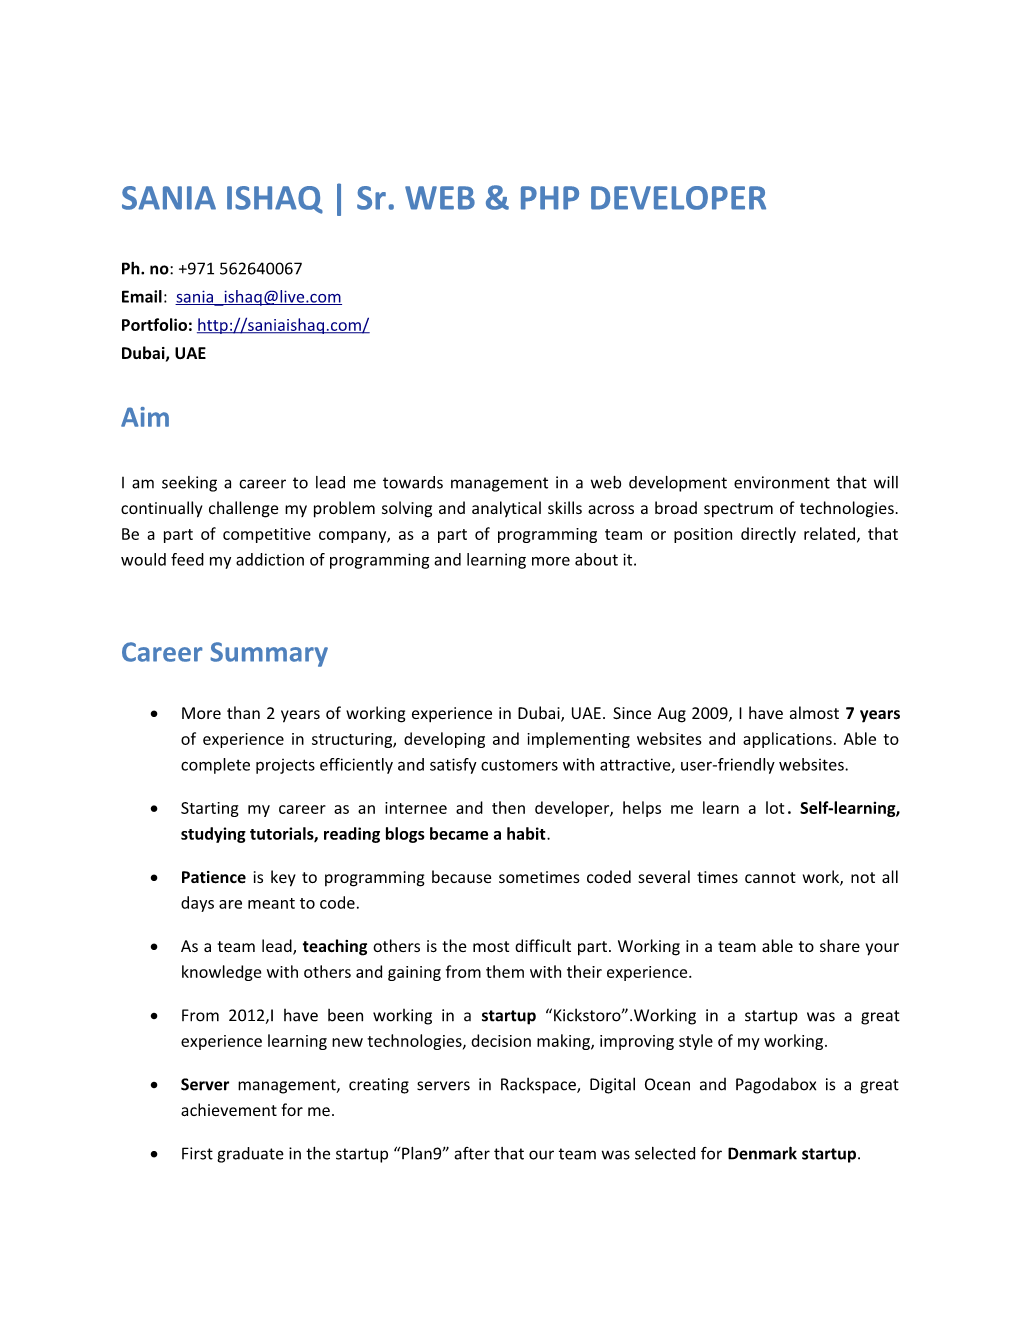 SANIA ISHAQ Sr. WEB & PHP DEVELOPER